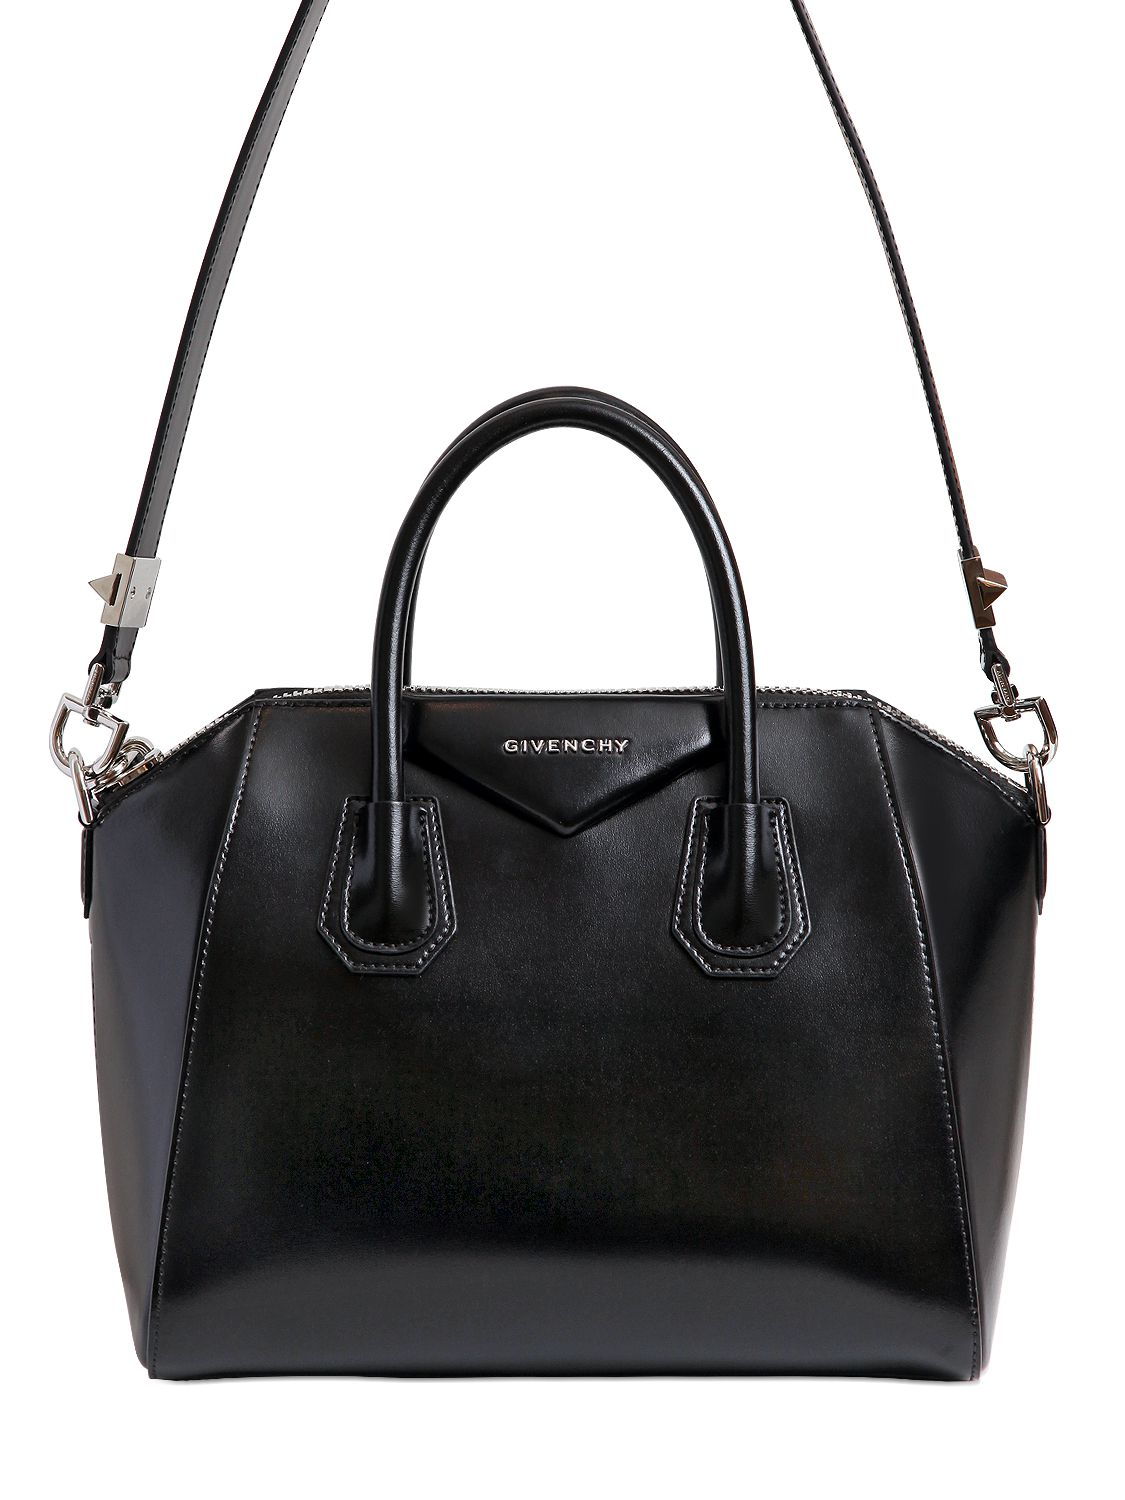 Lyst - Givenchy Small Antigona Shiny Leather Bag in Black